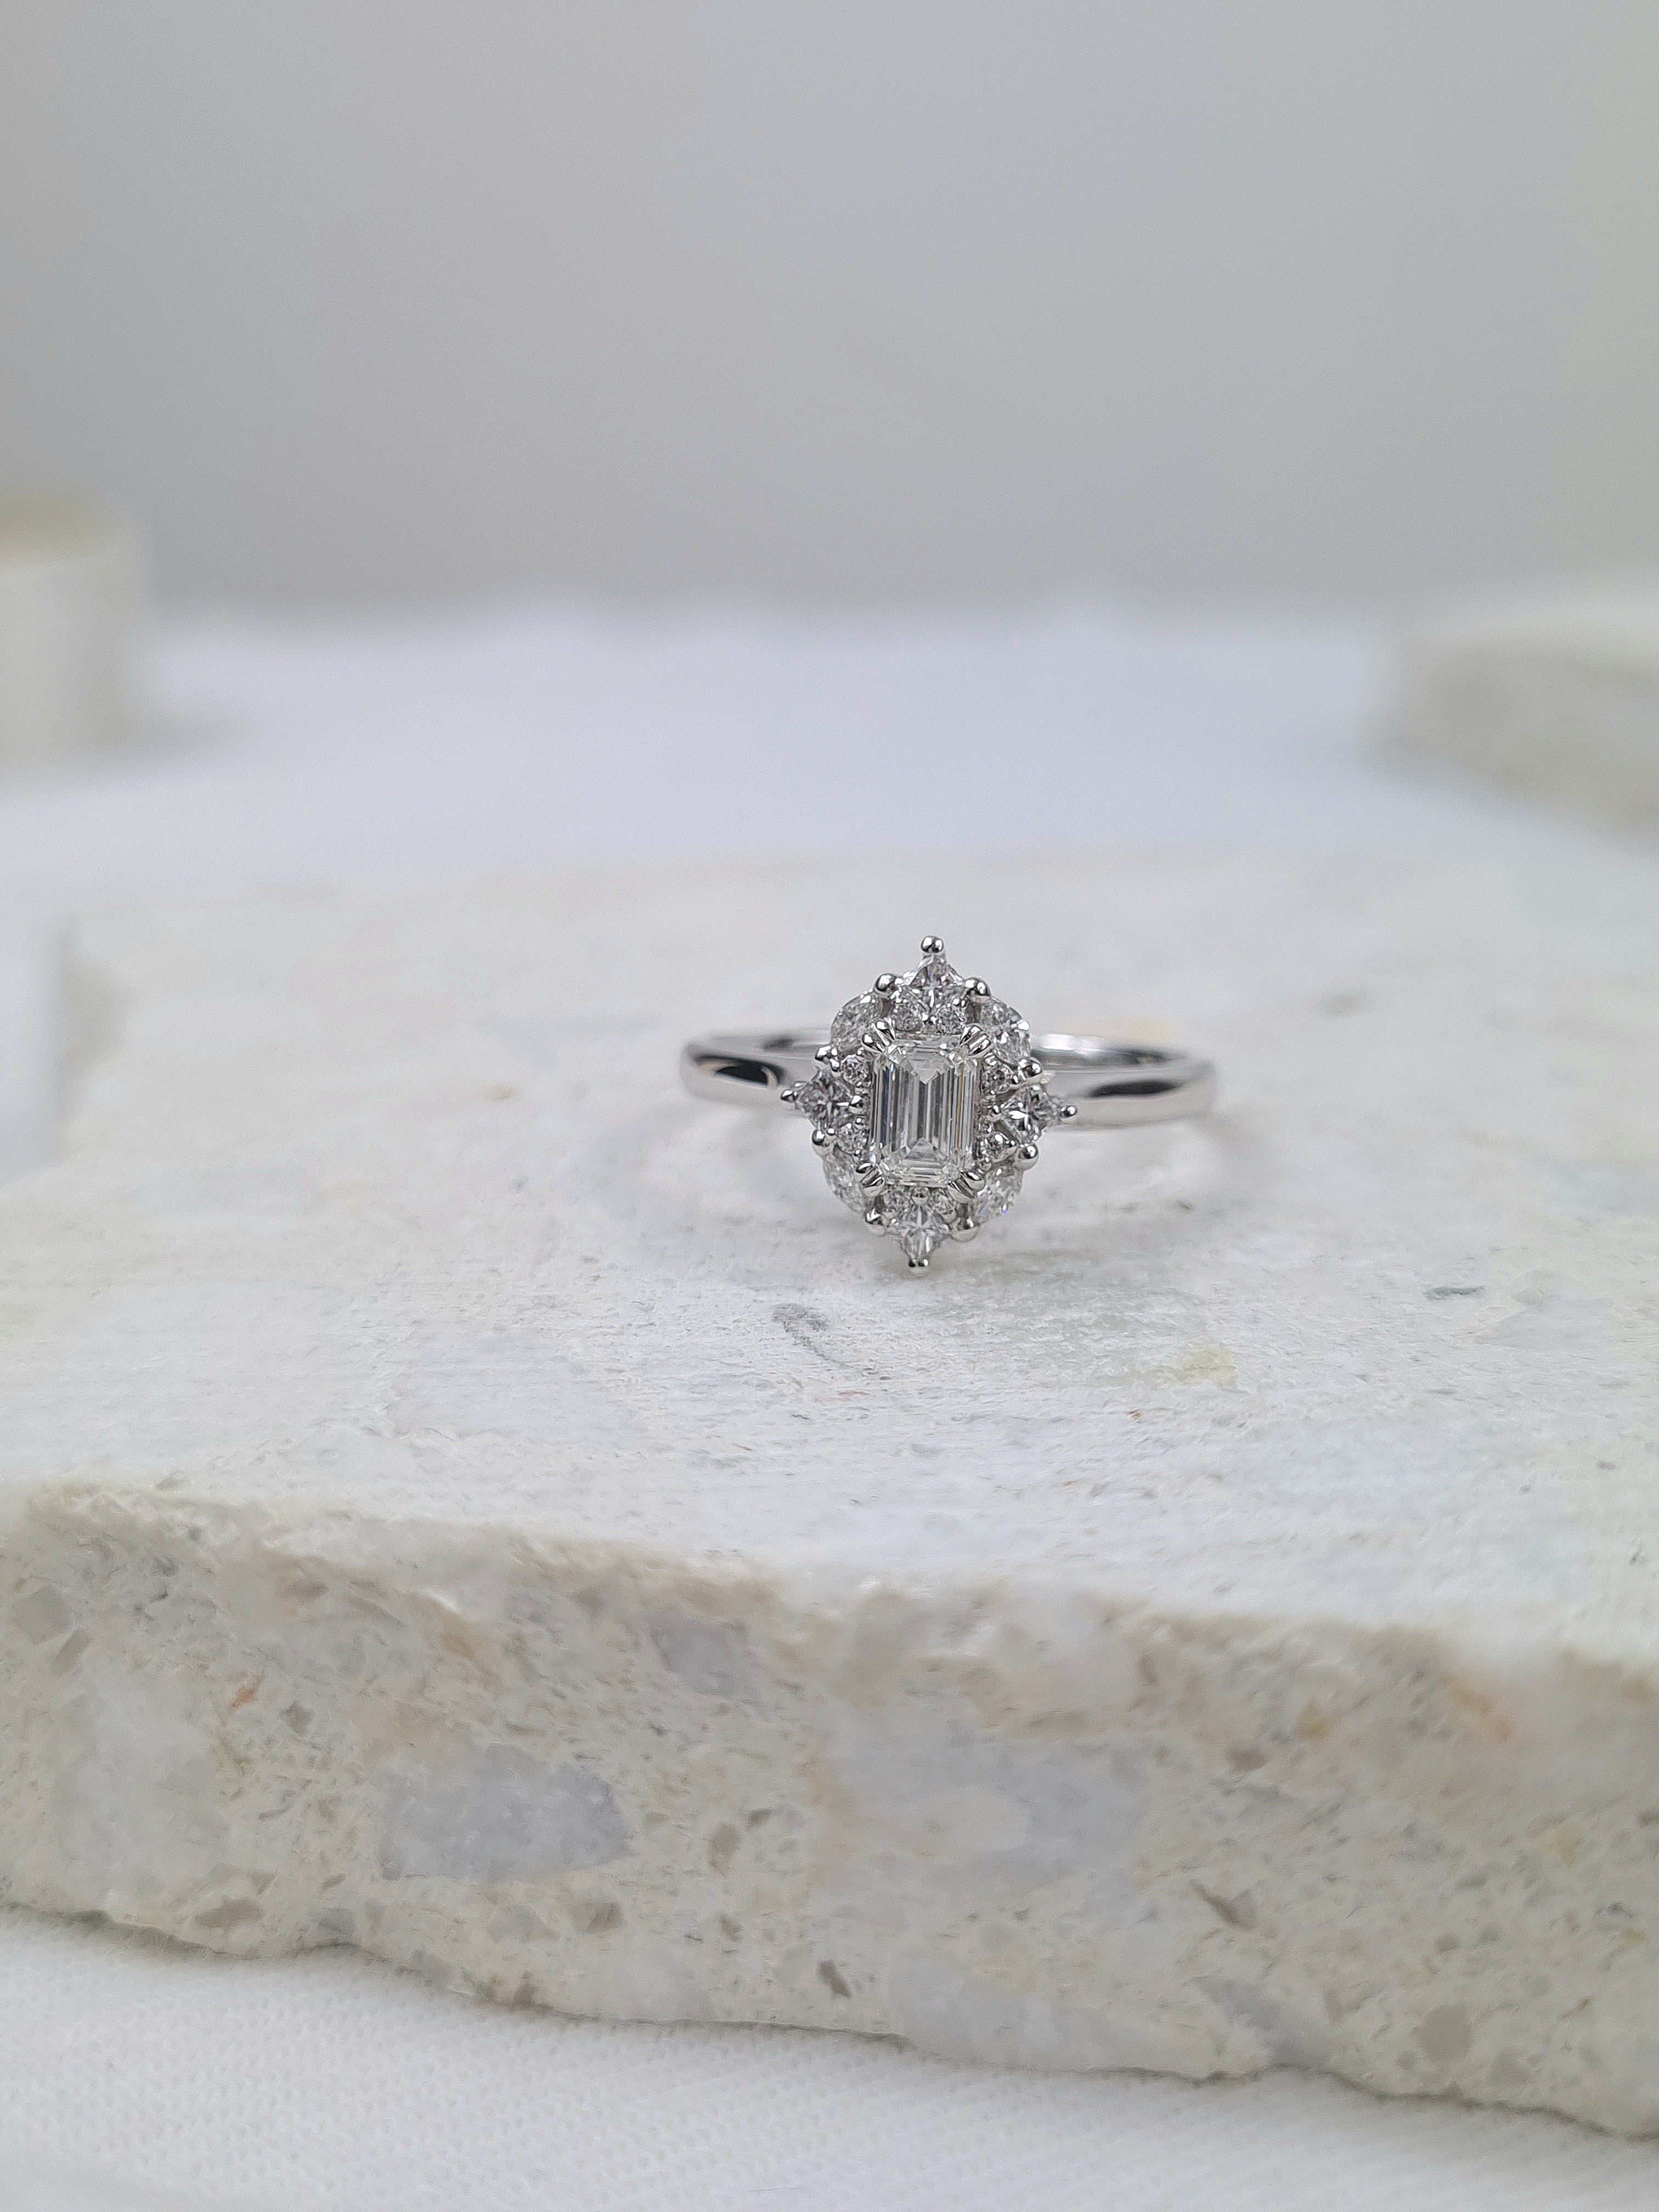 18ct Gold Emerald Cut Halo Diamond Ring, 0.61 carats.